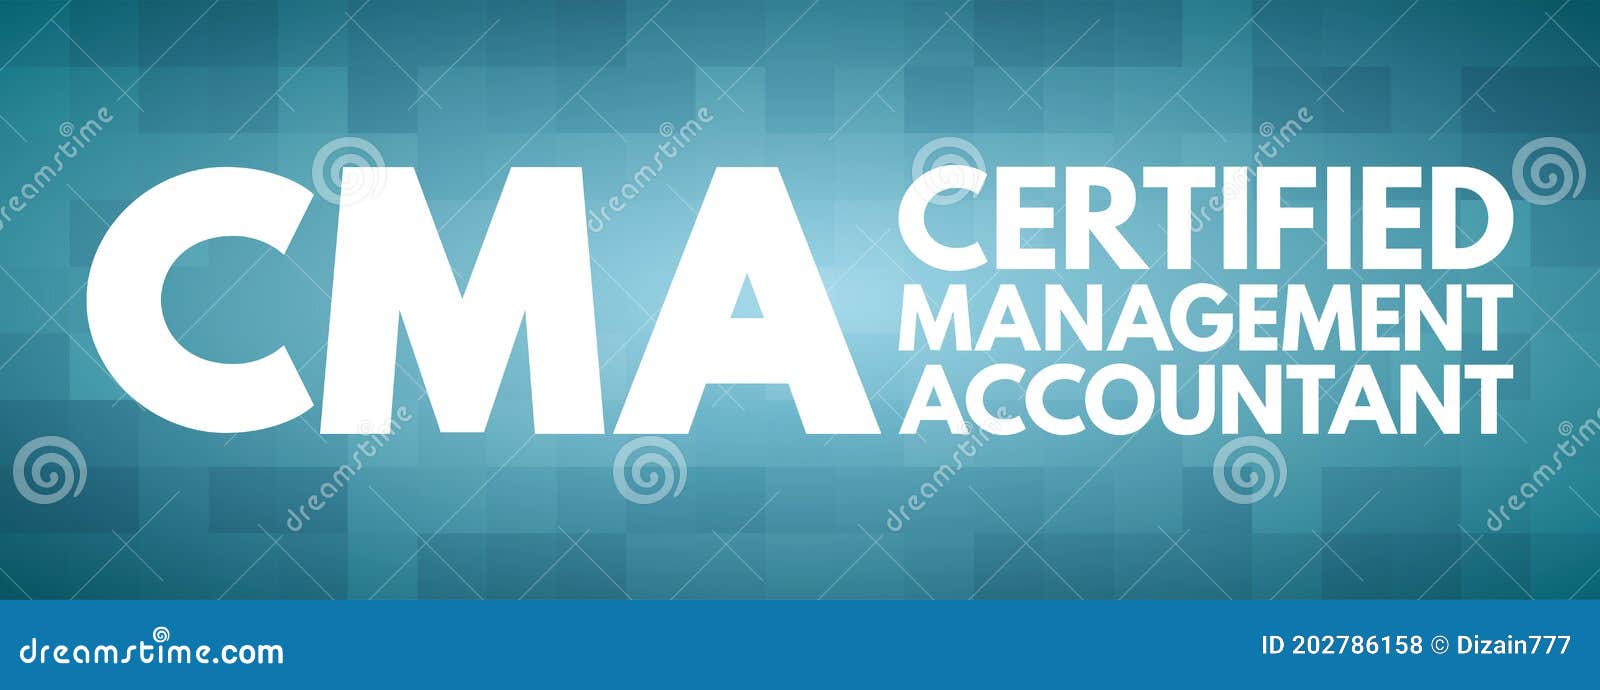 cma - certified management accountant acronym